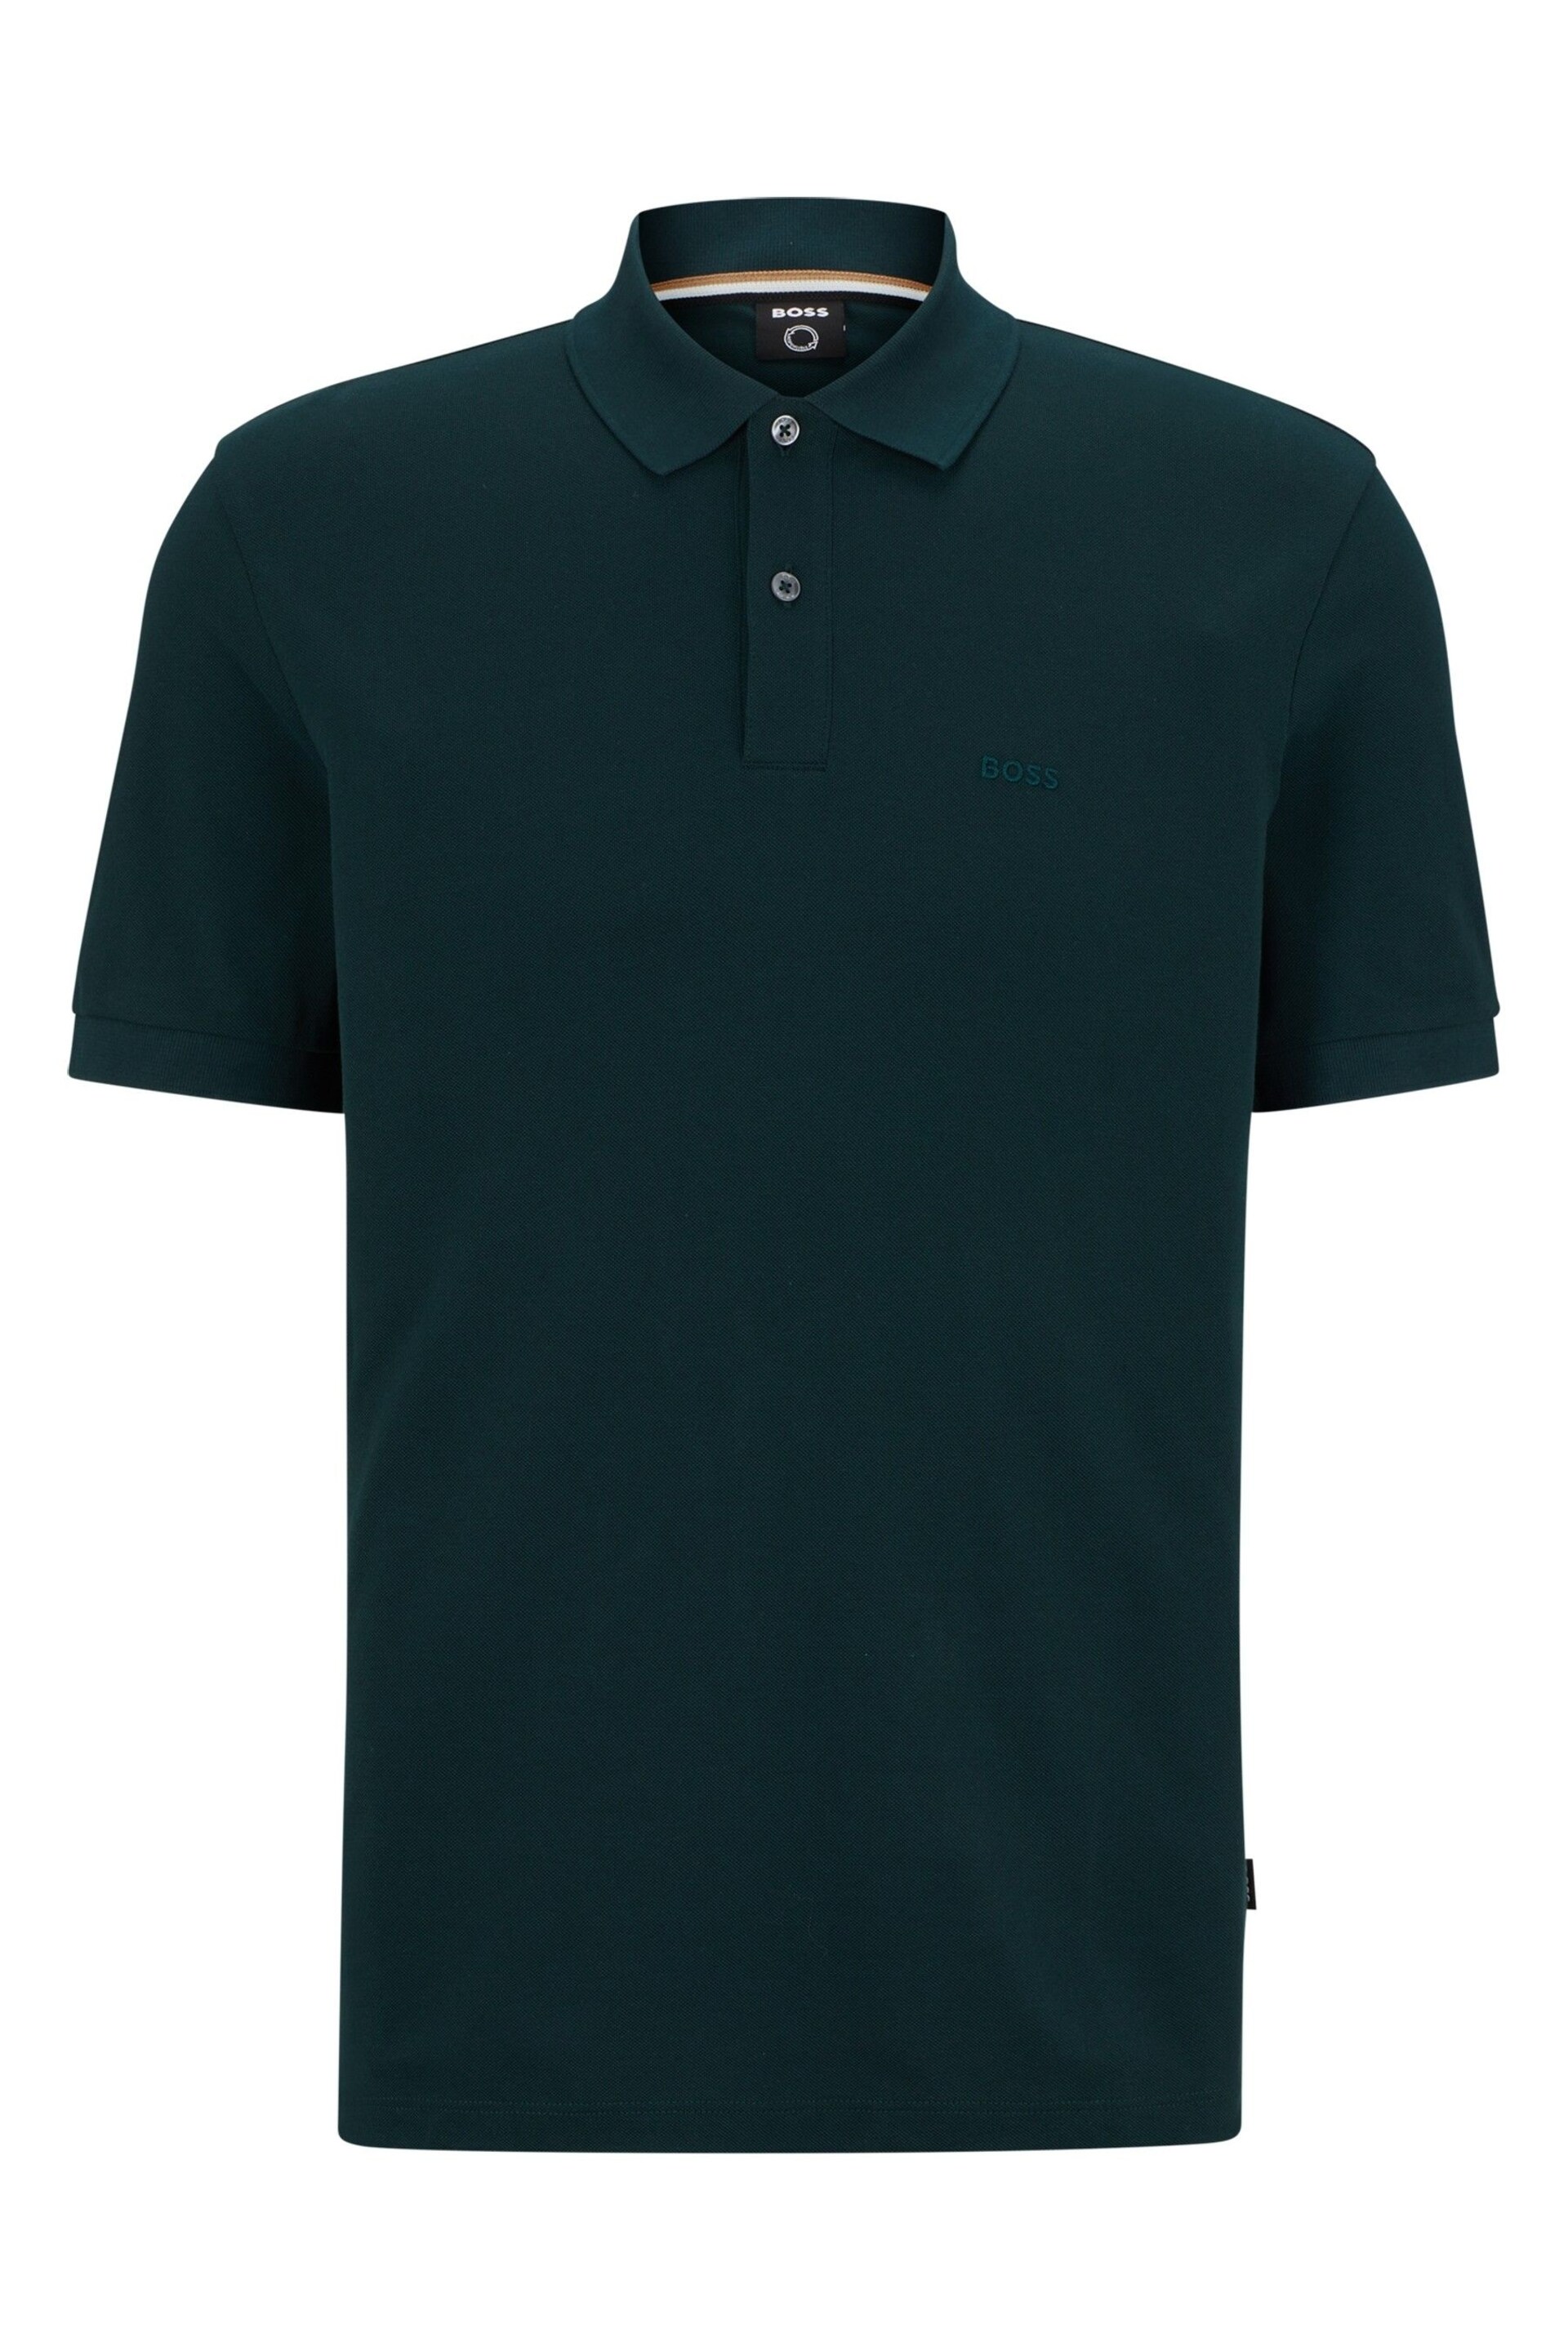 BOSS Dark Green Pallas Polo Shirt - Image 5 of 5